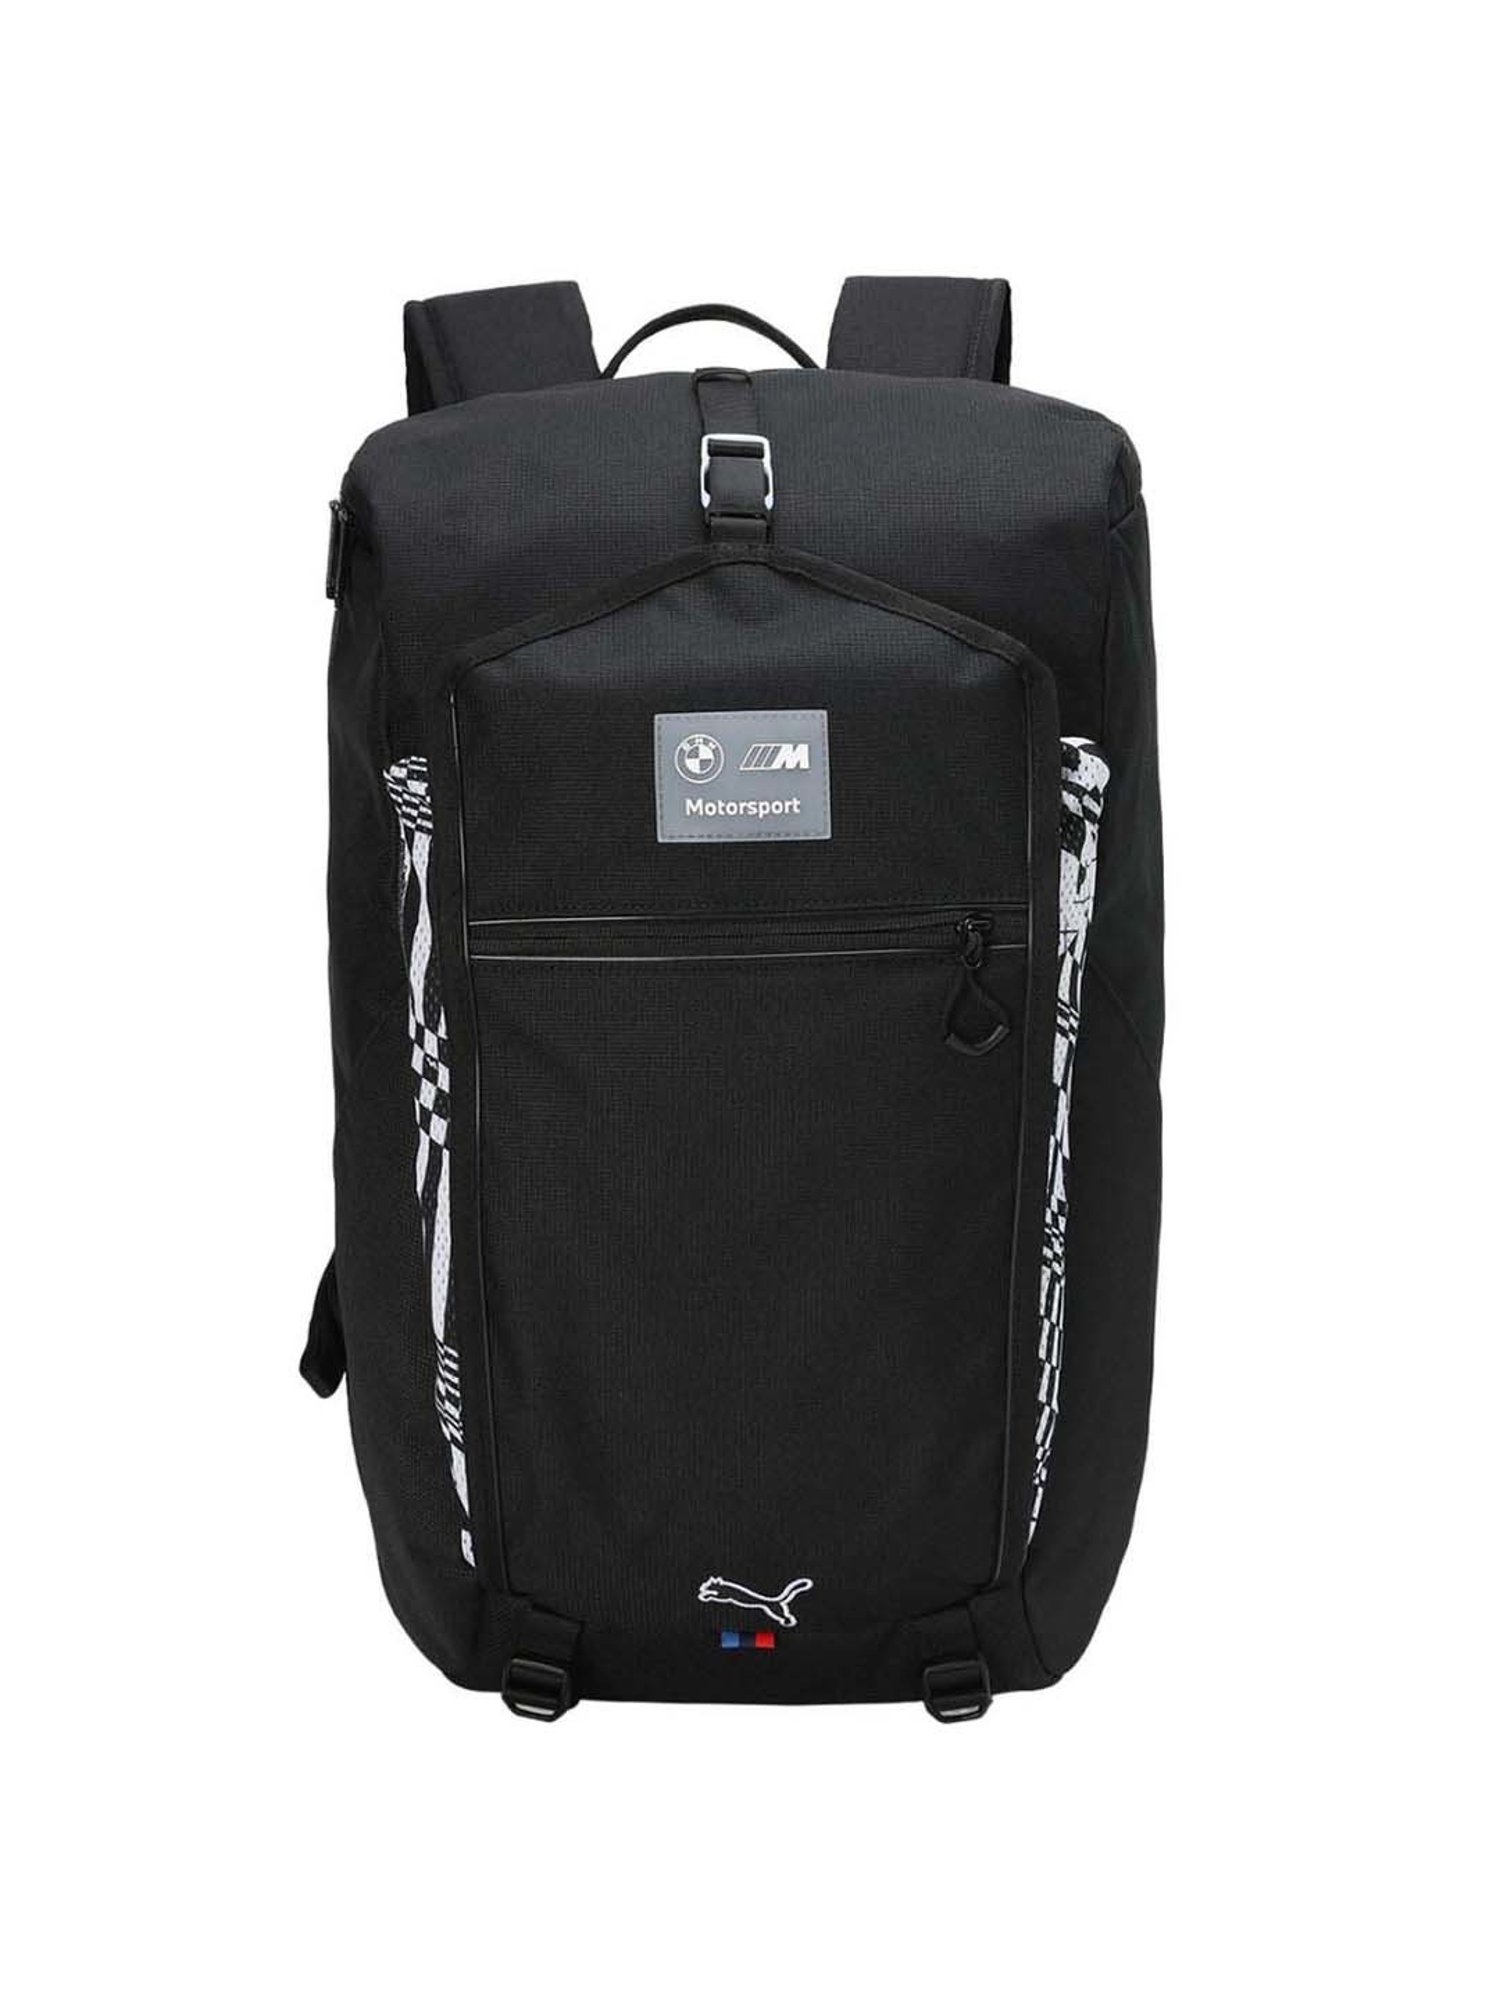 Bags & Backpacks | Puma Motorsport Bag | Freeup